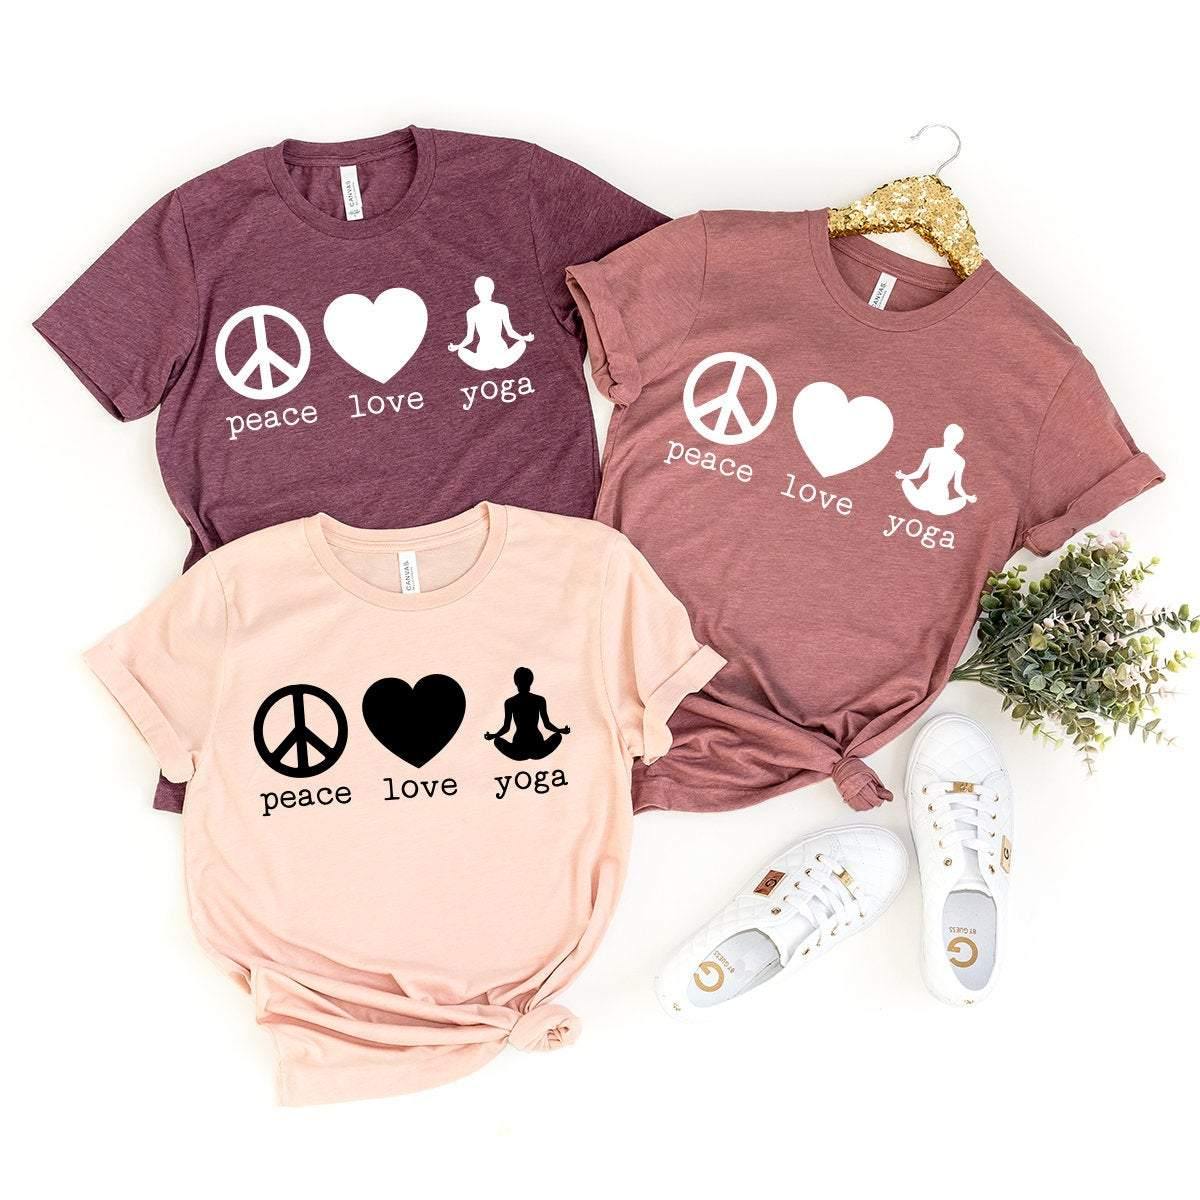 Peace Love Yoga Tee, Yoga Shirt, Meditation Shirt, Yoga T-Shirt, Yoga Lover Shirt, Inspirational Shirt, Yoga Tee, Yoga Gift, Meditation Tee - Fastdeliverytees.com